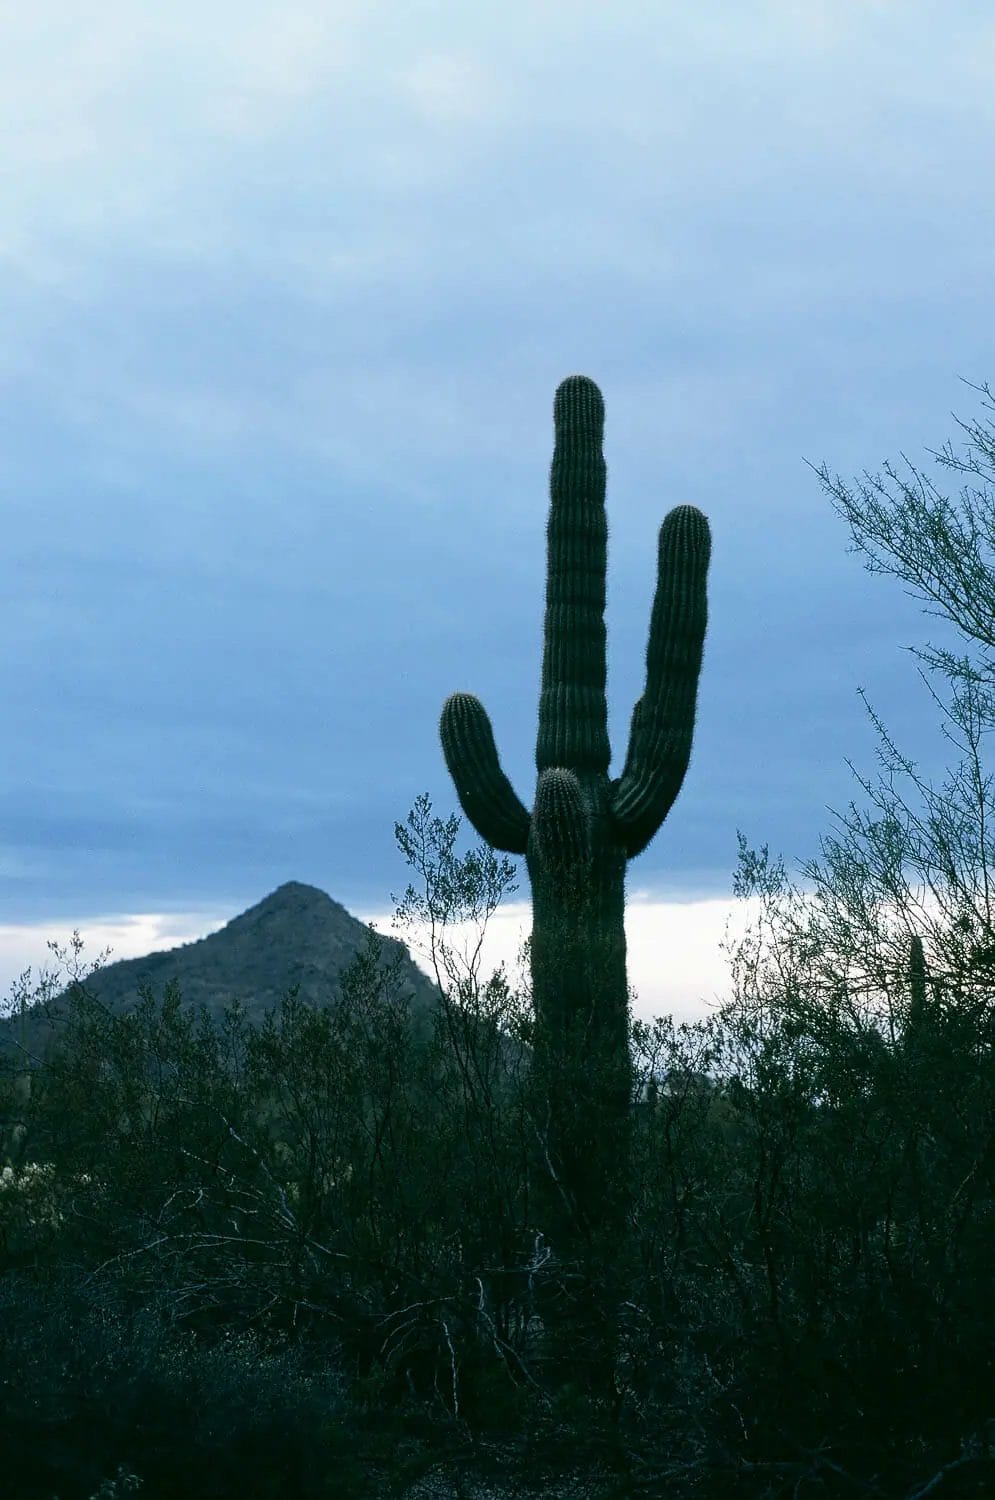 A saguaro cactus stands against a twilight sky in a desert landscape.